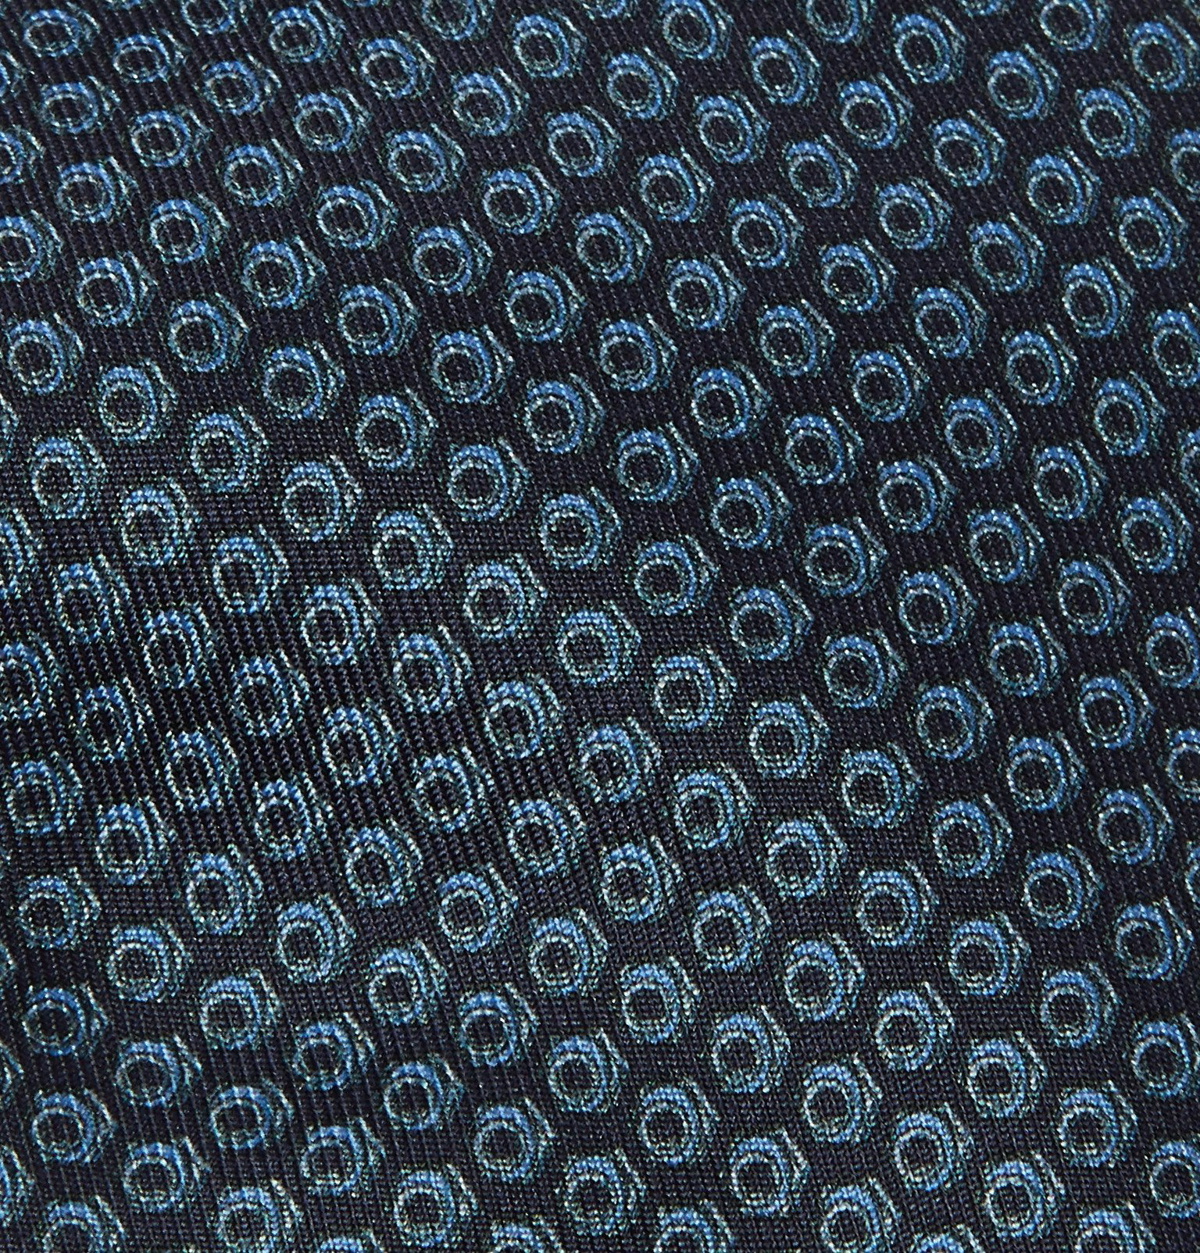 Dunhill Men's Printed Ties - Blue